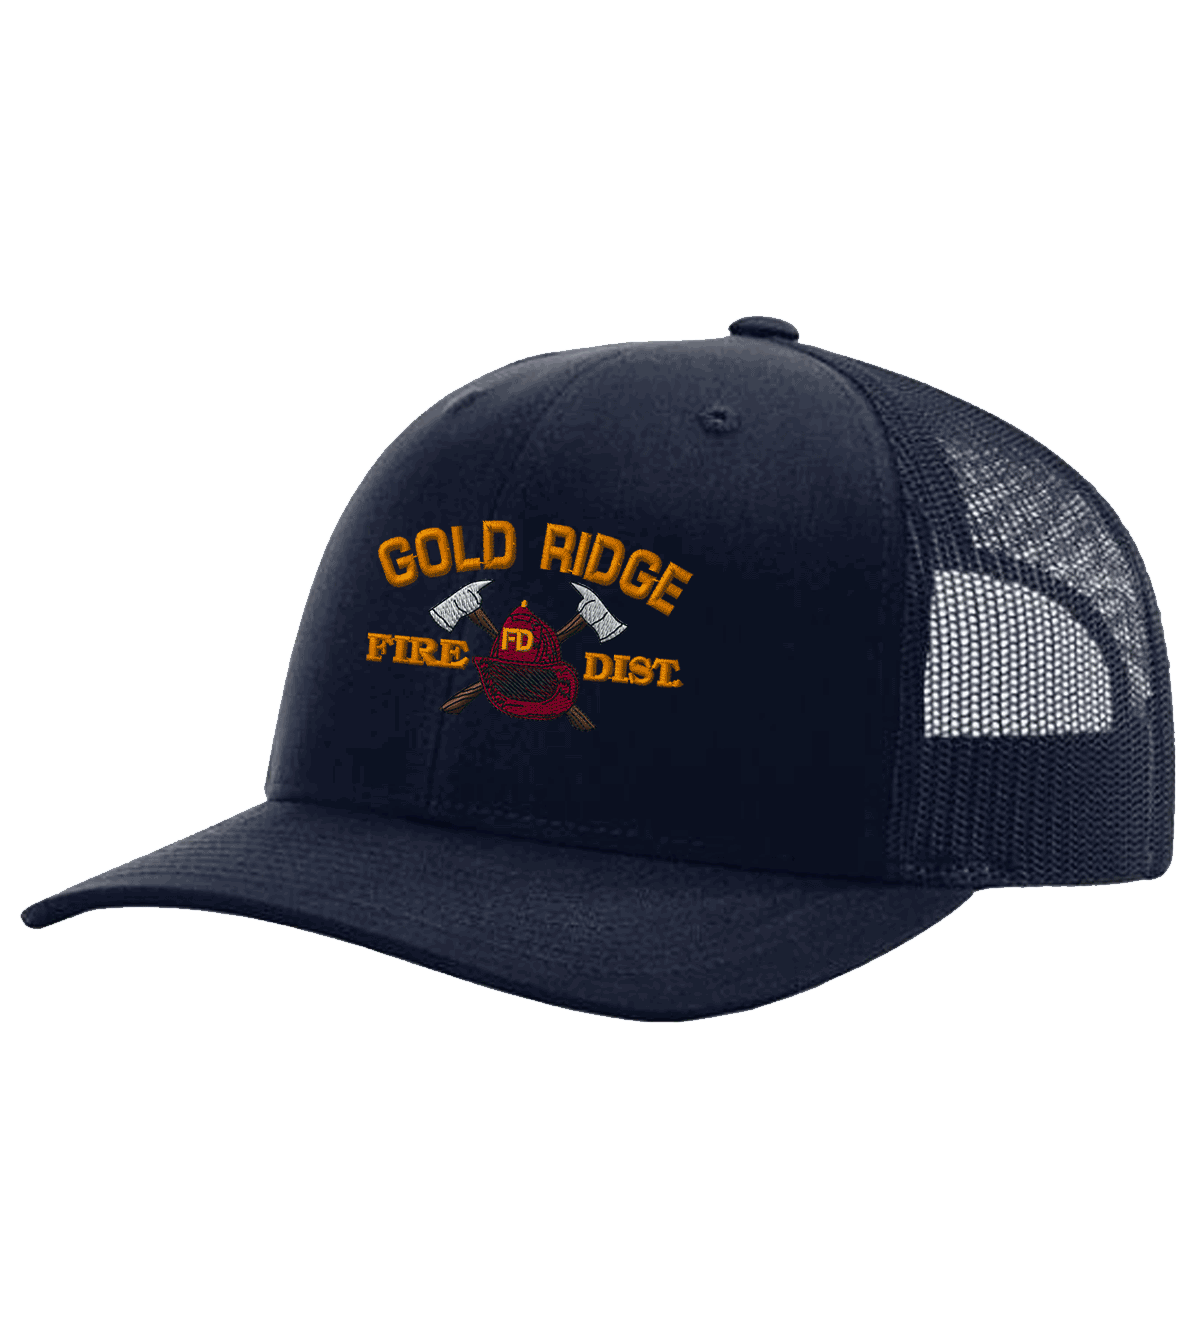 Gold Ridge Mesh Snapback Trucker